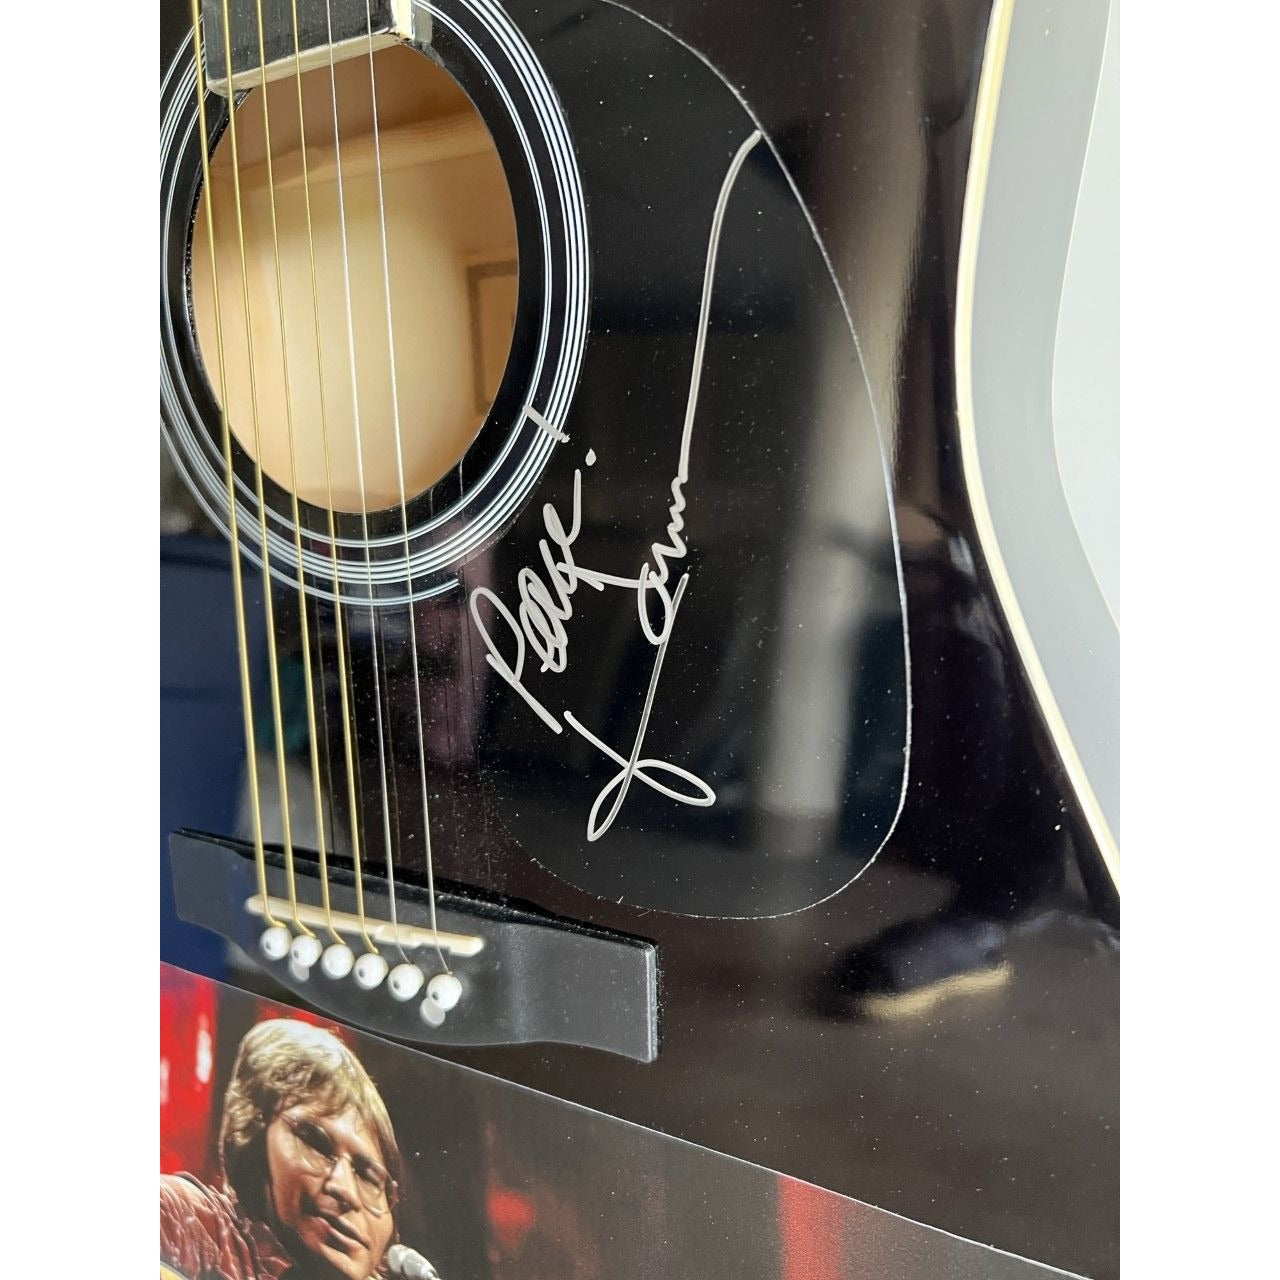 John Denver full size acoustic guitar signed with proof